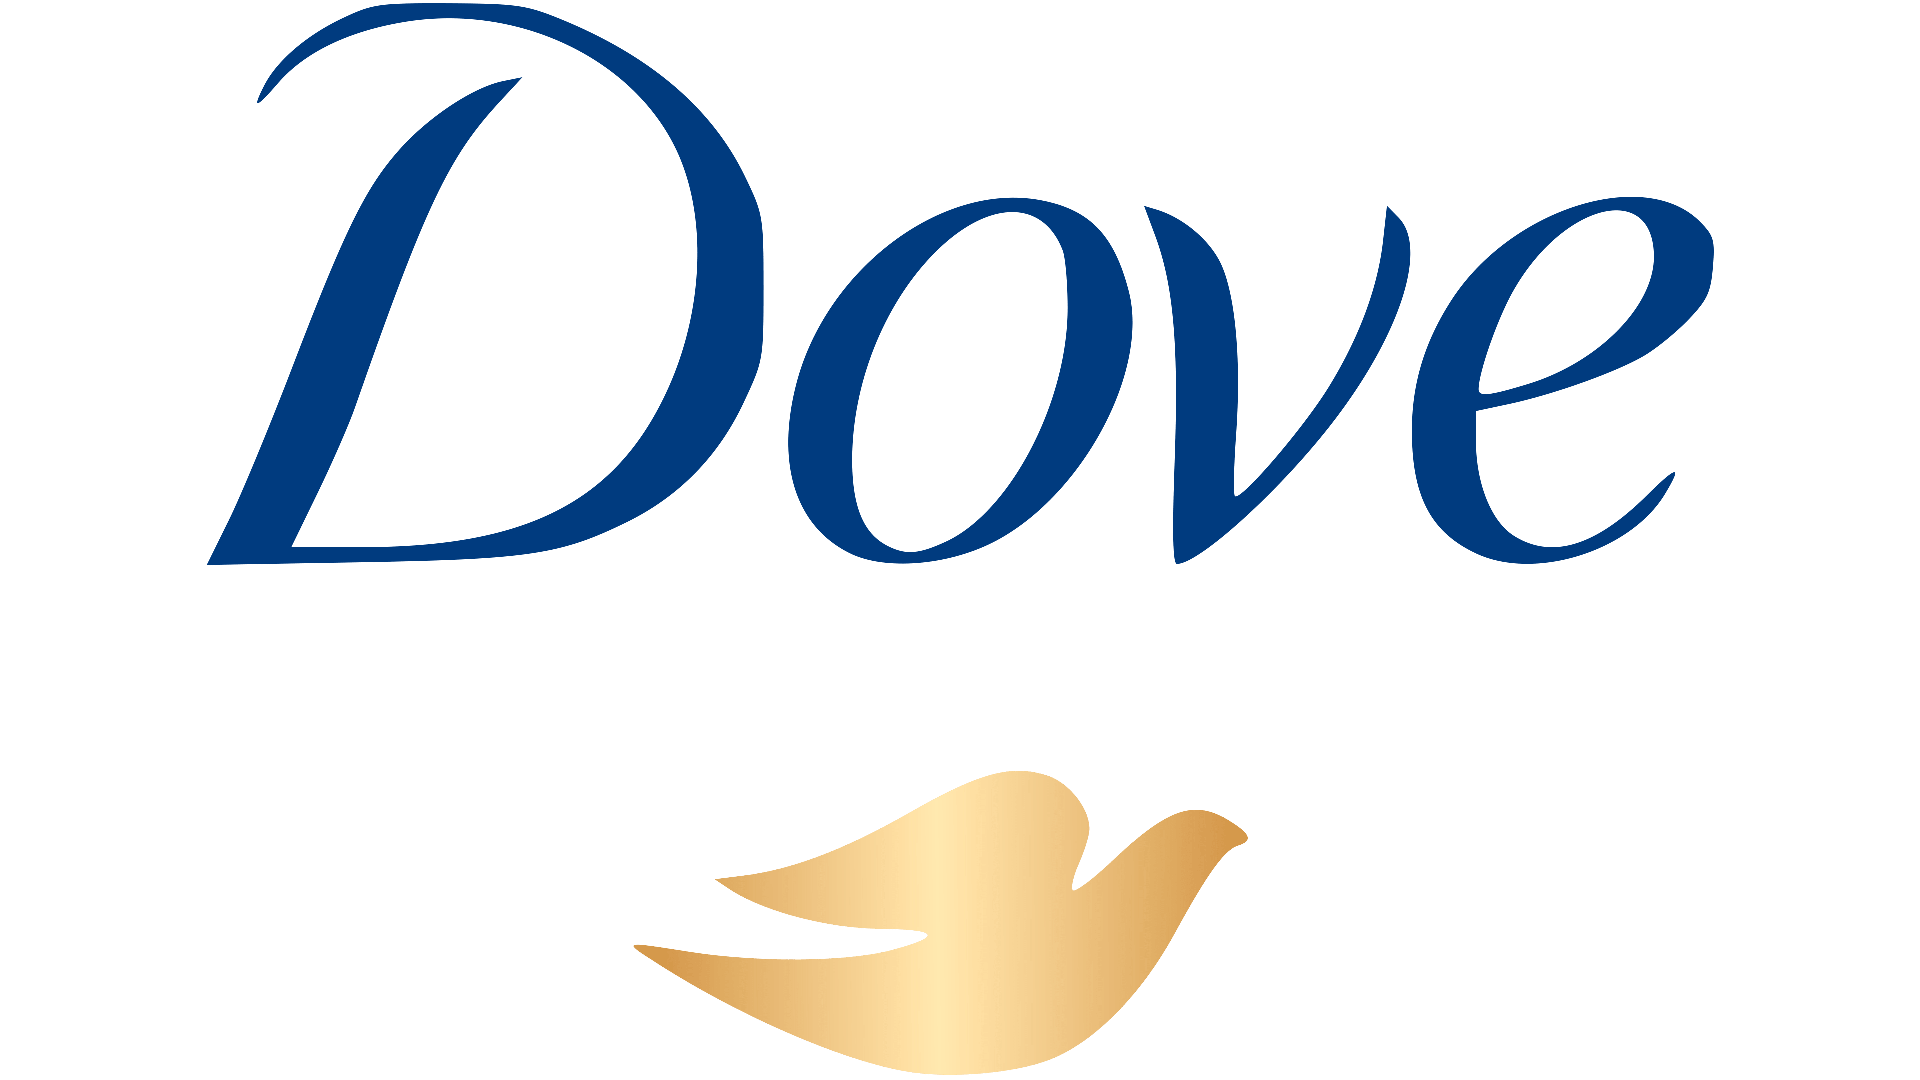 Brand: Dove